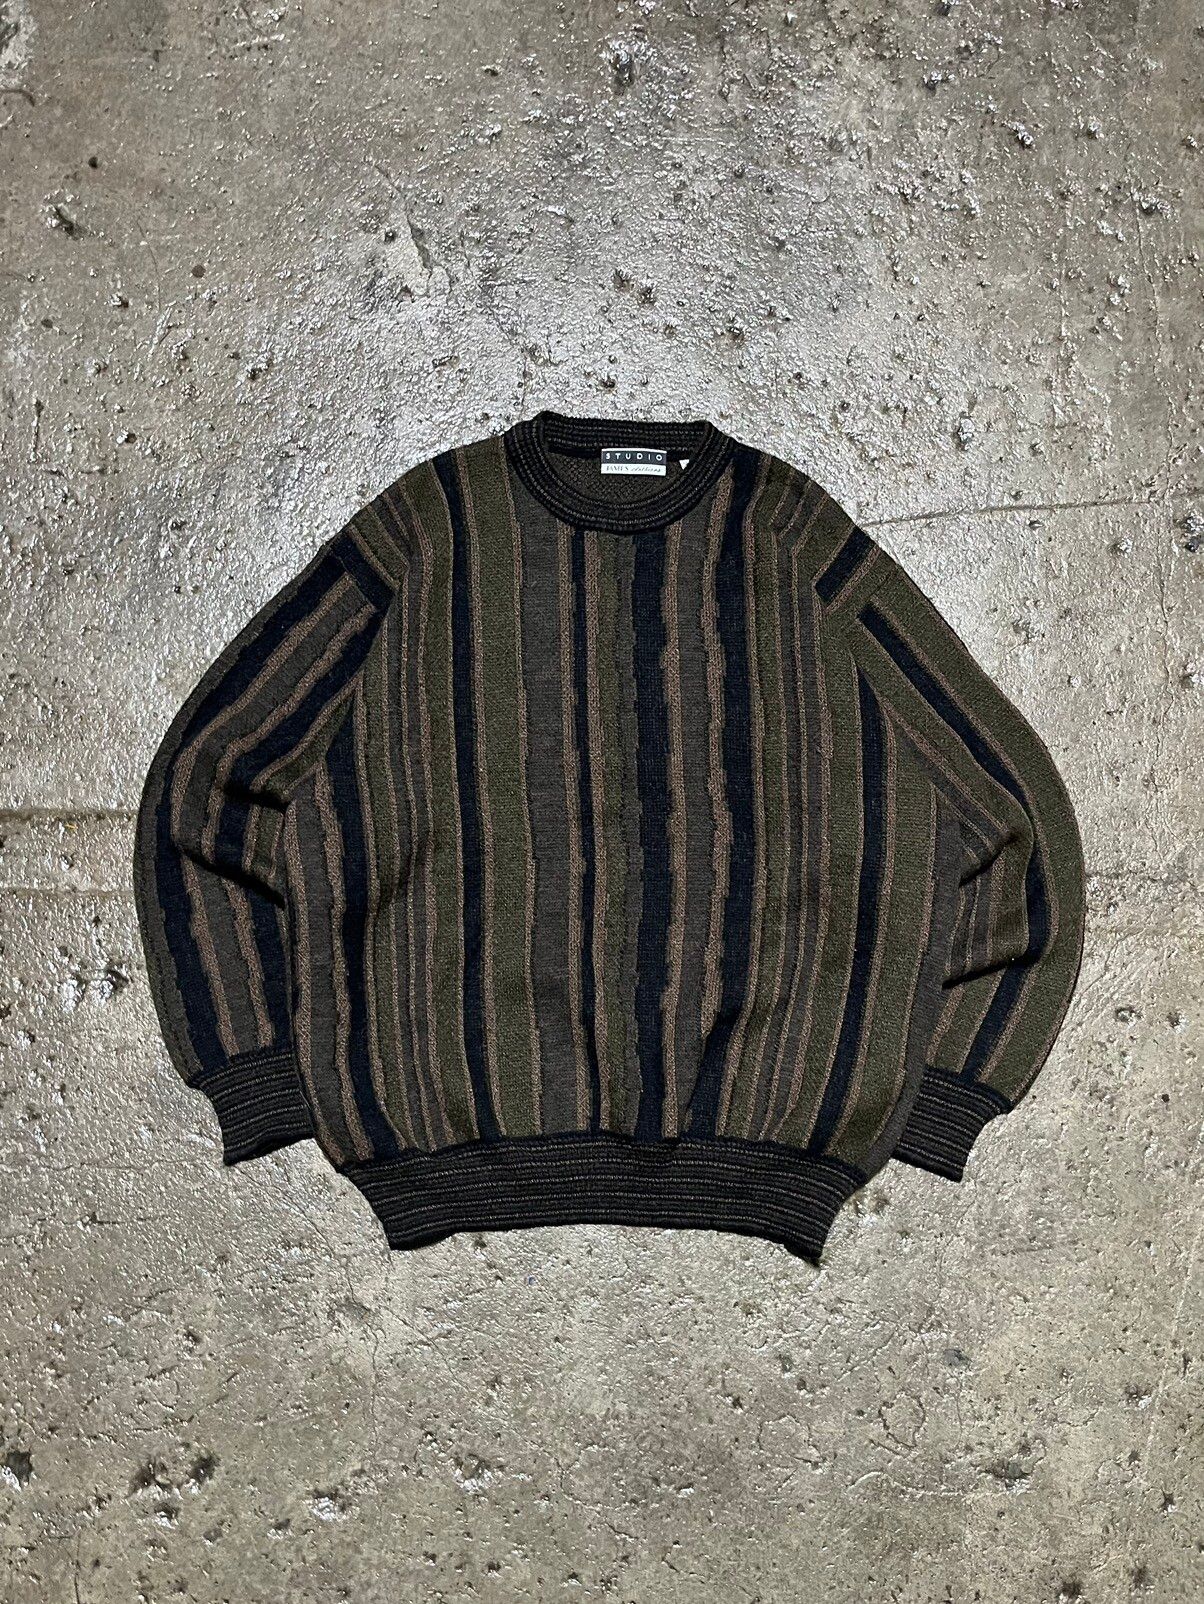 Vintage Crazy Vintage 90s Coogi Style Argyle Knit Pattern Sweater | Grailed